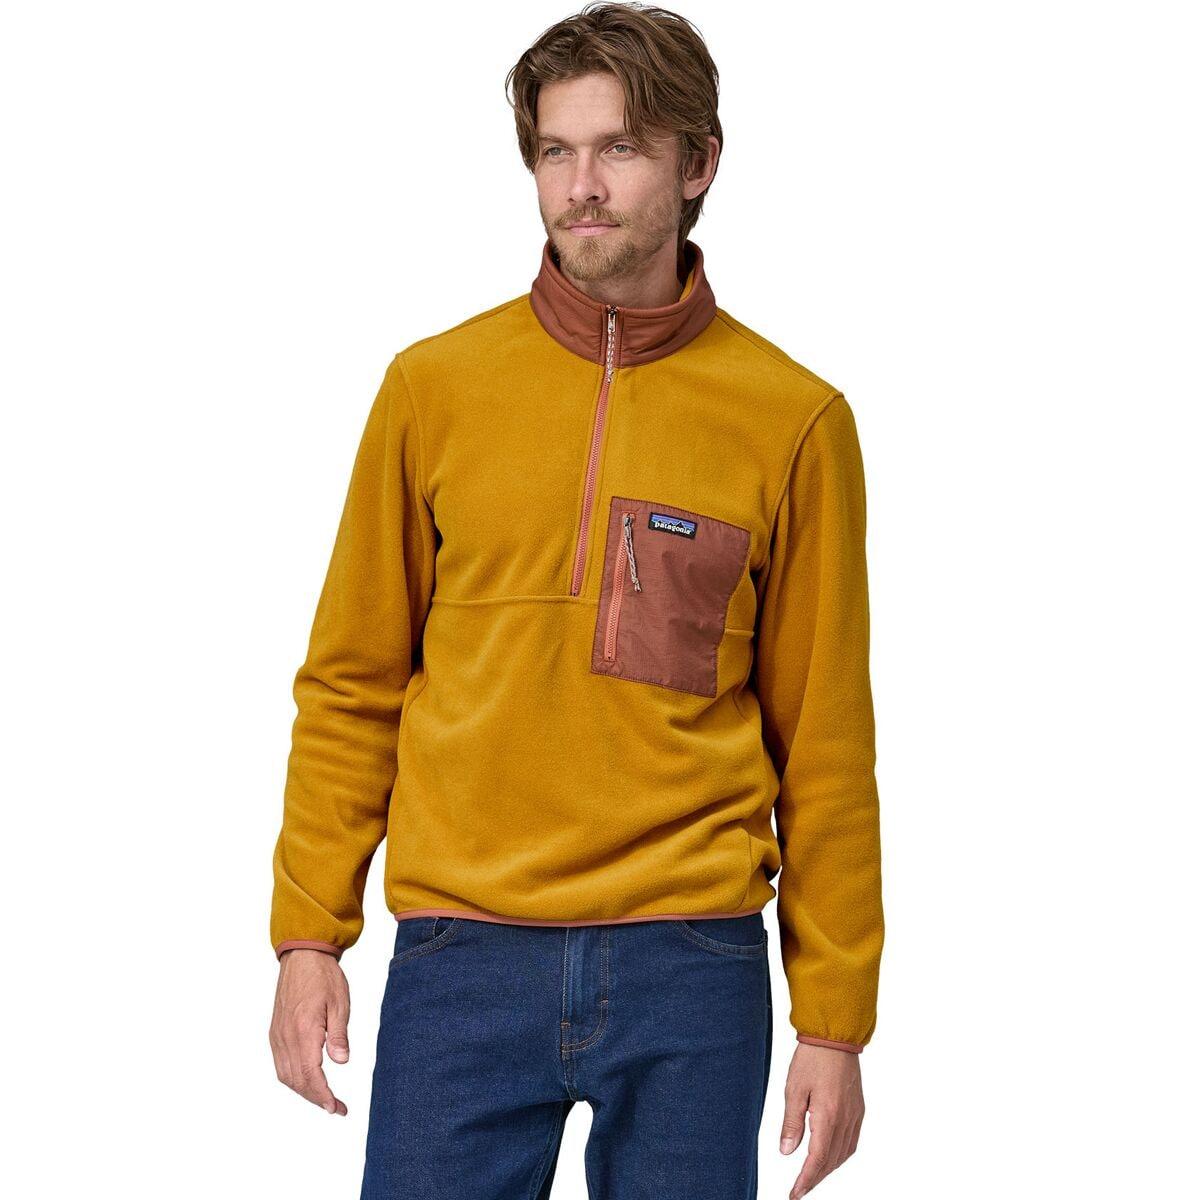 Patagonia Men's Microdini Half-Zip Pullover Sweatshirt (Cosmic Gold) $58.05 + Free Shipping